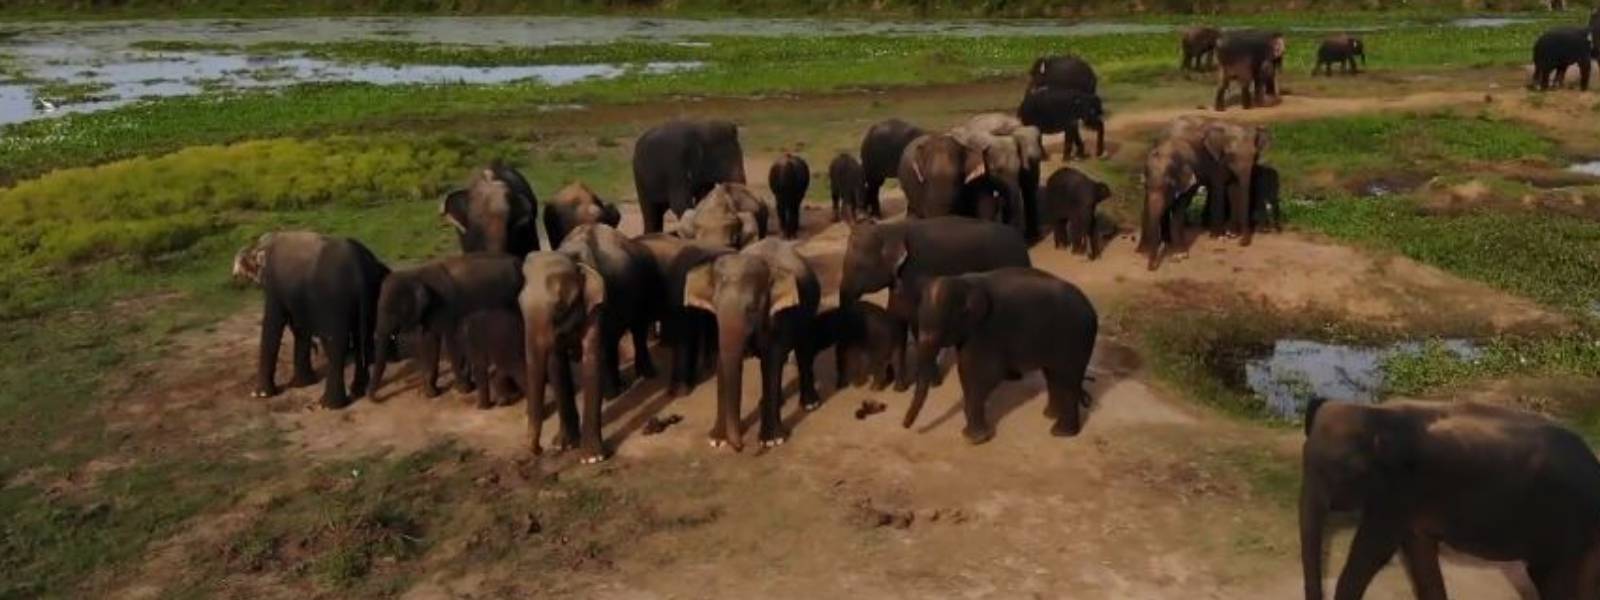 Will wild elephants encroach into cities?